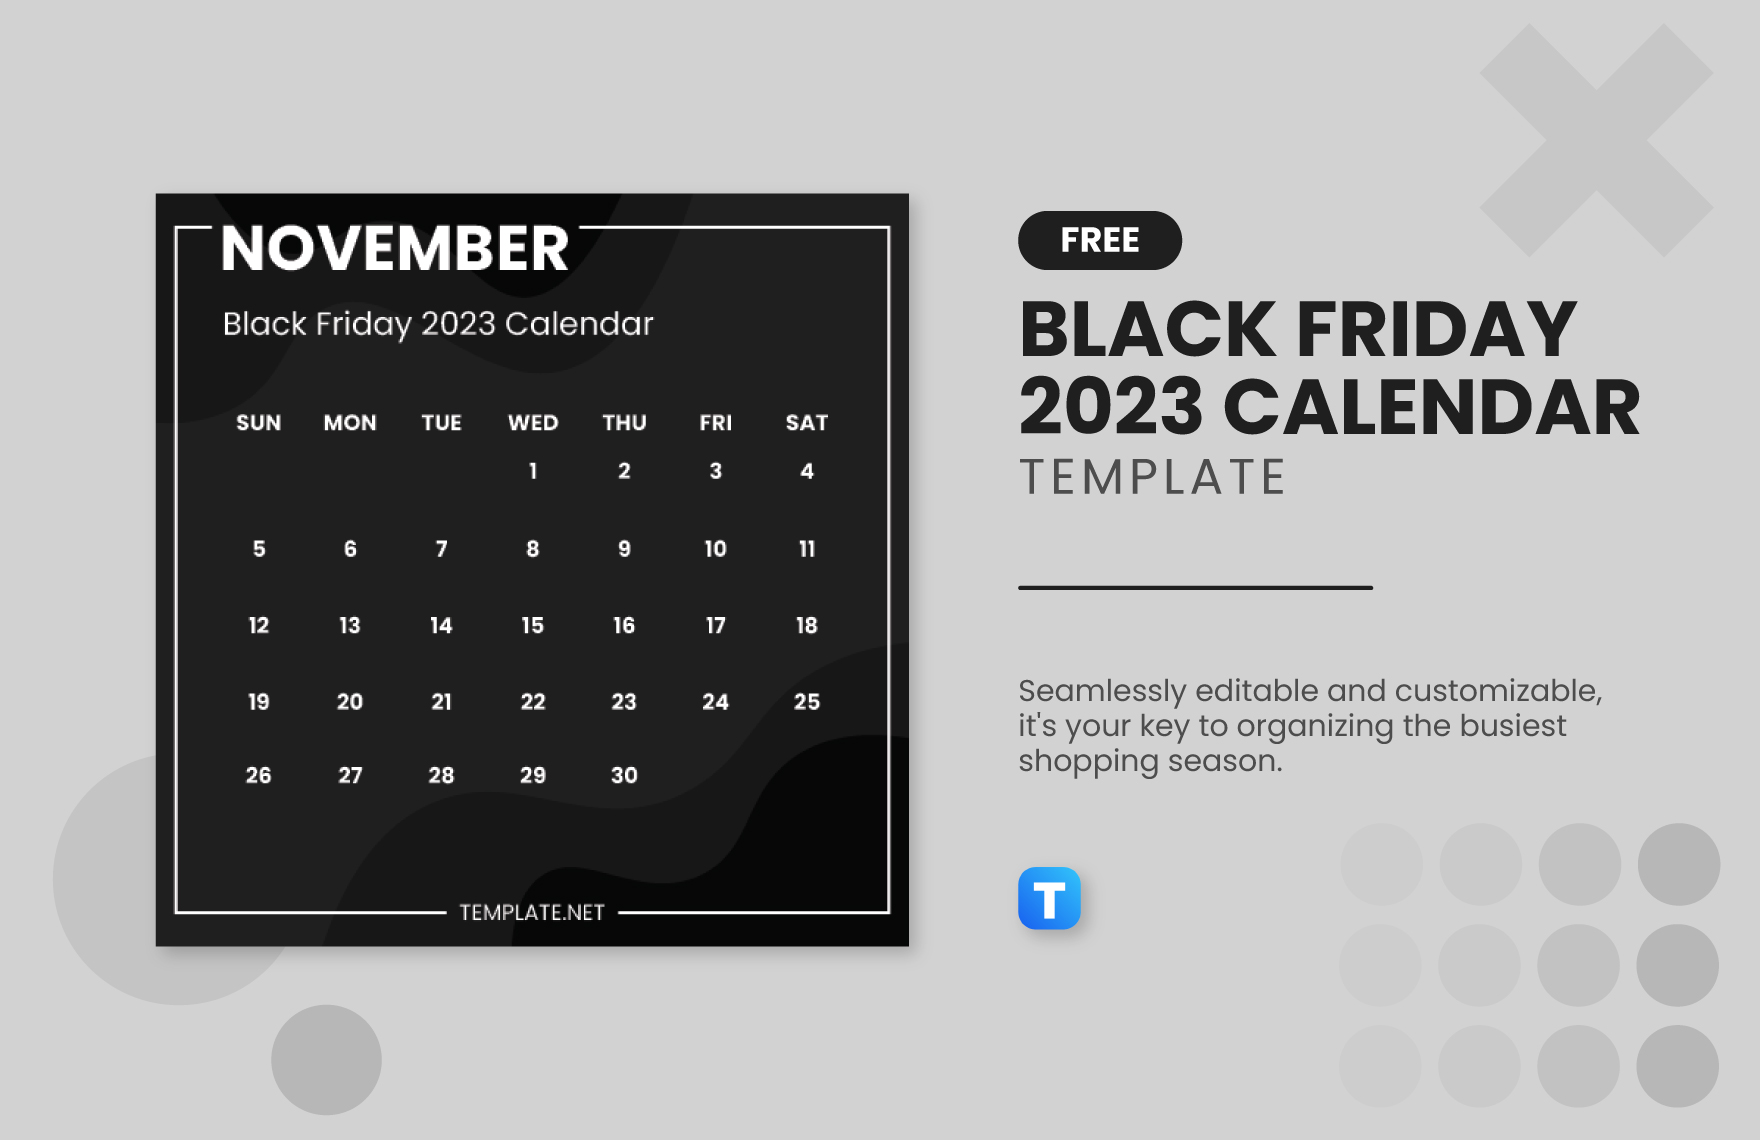 Black Friday 2023 Calendar Template